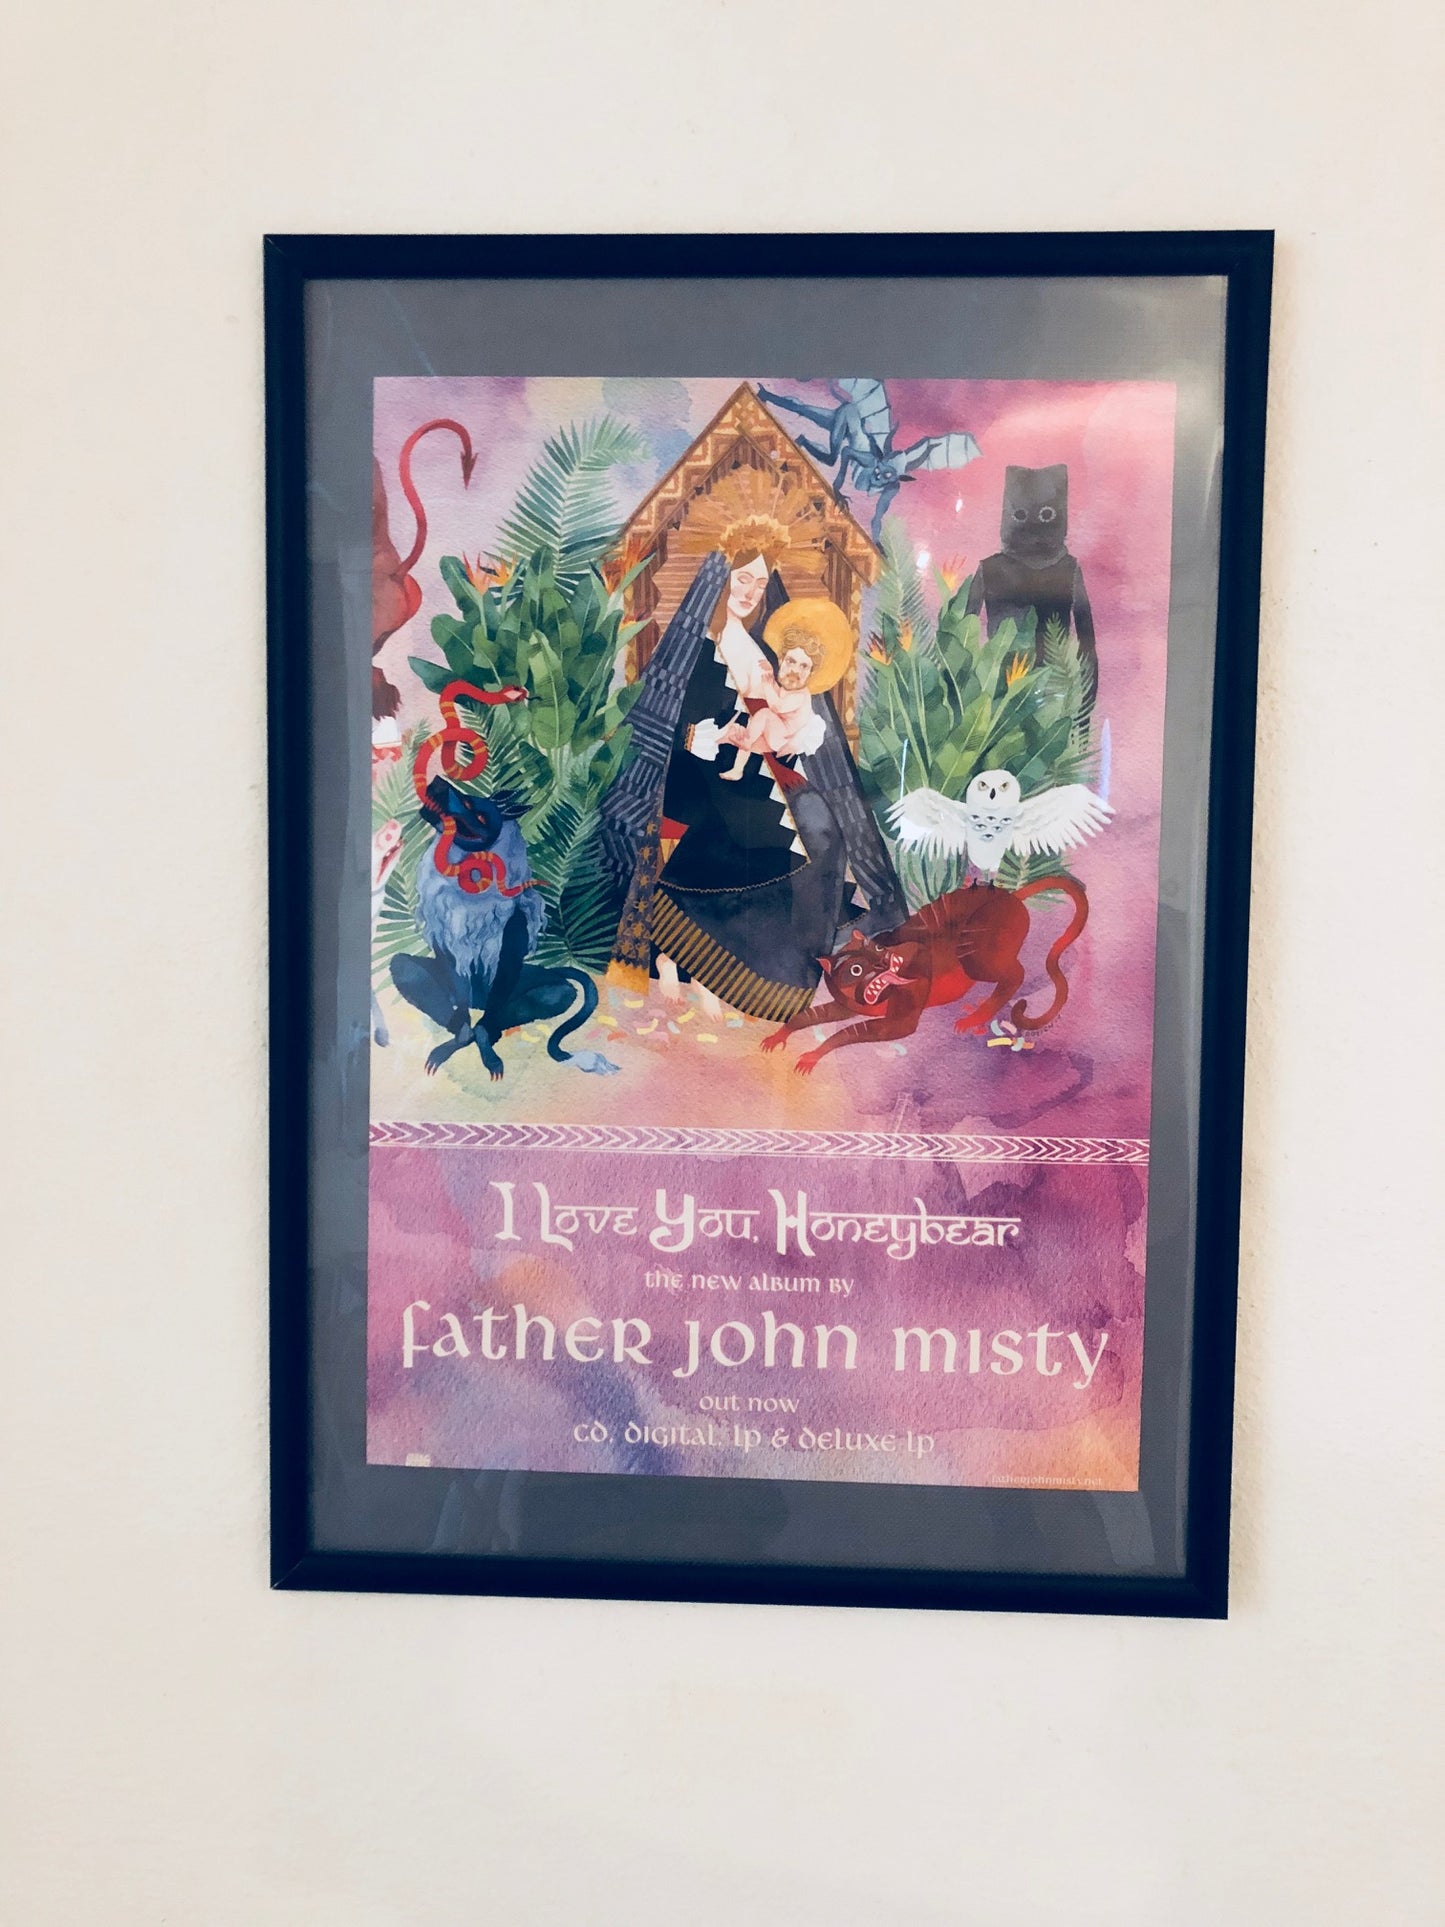 Father John Misty - I love you honeybear